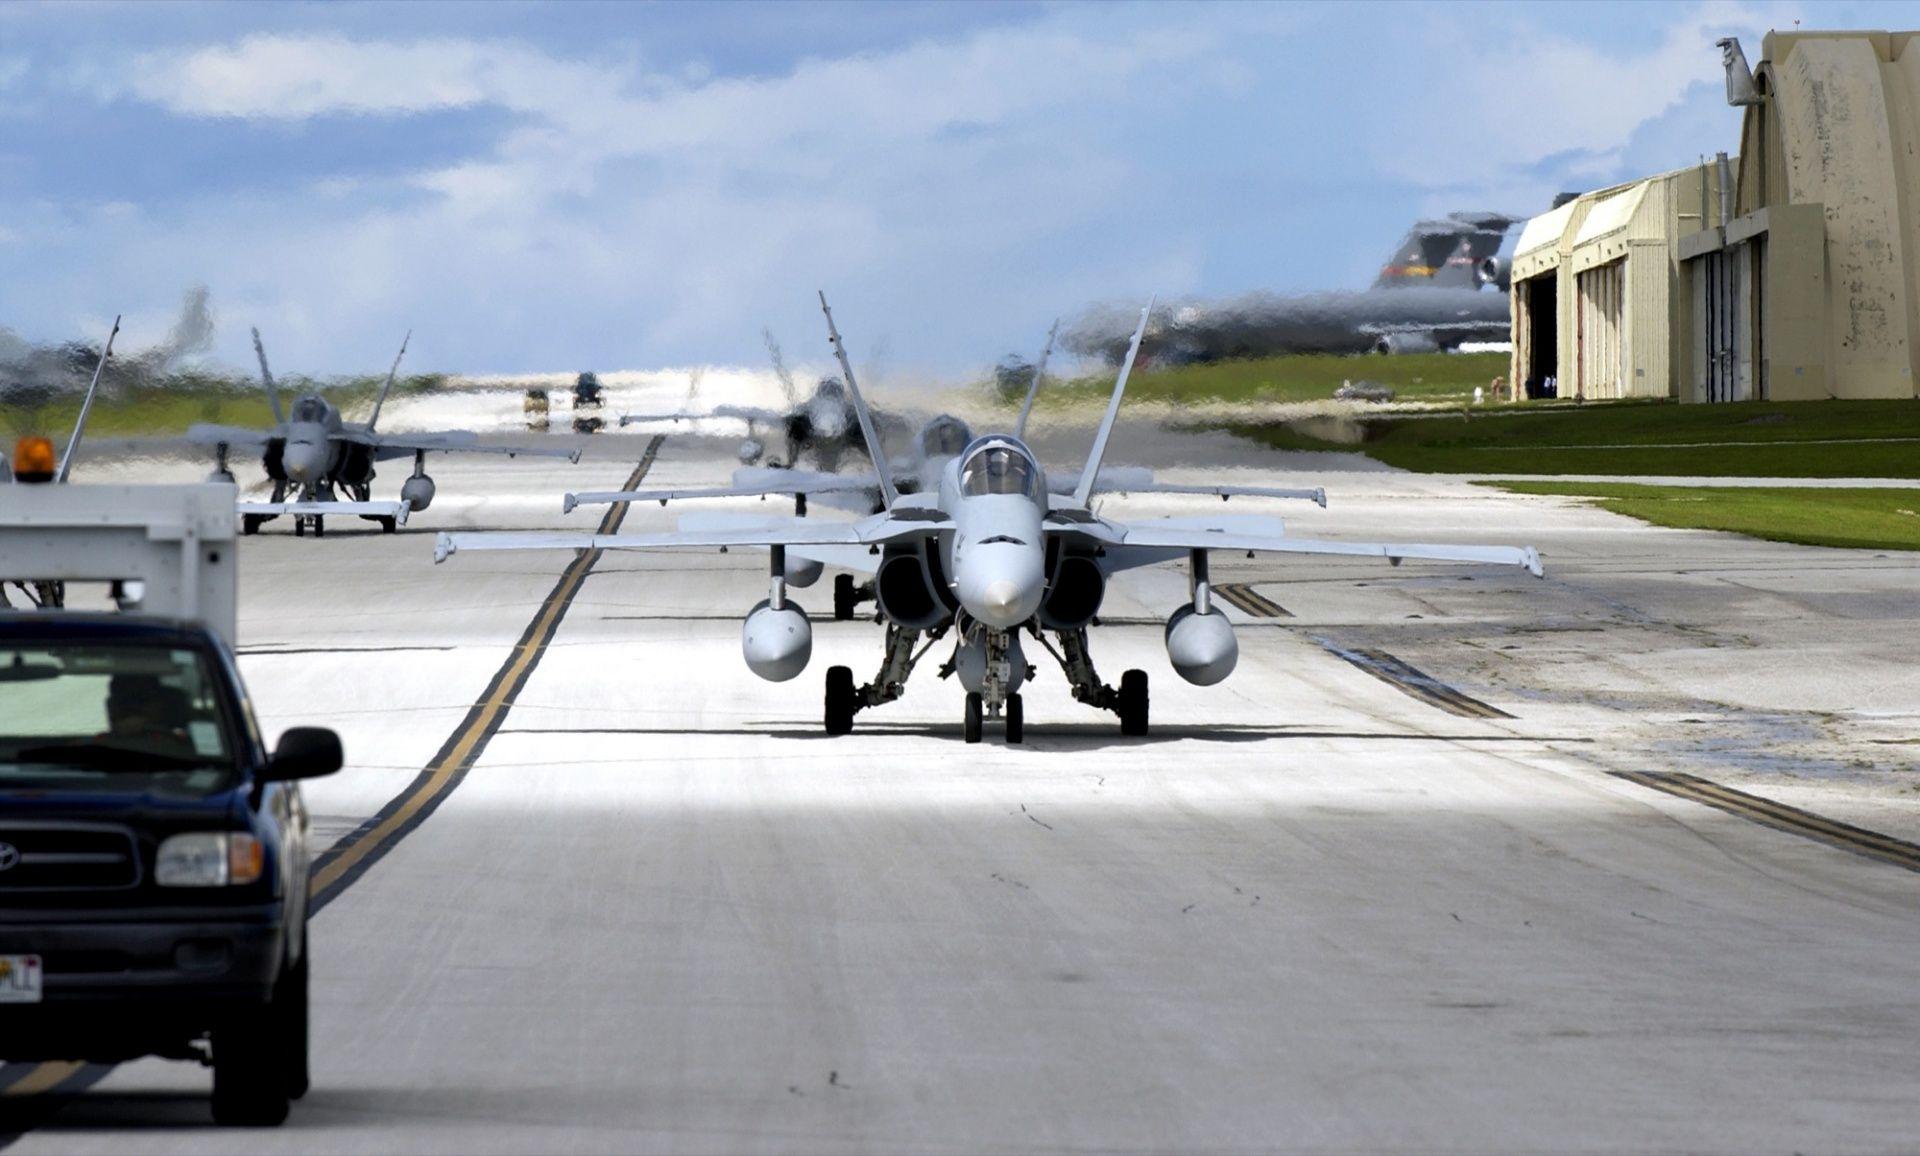 F18s on runway wallpaper. F18s on runway